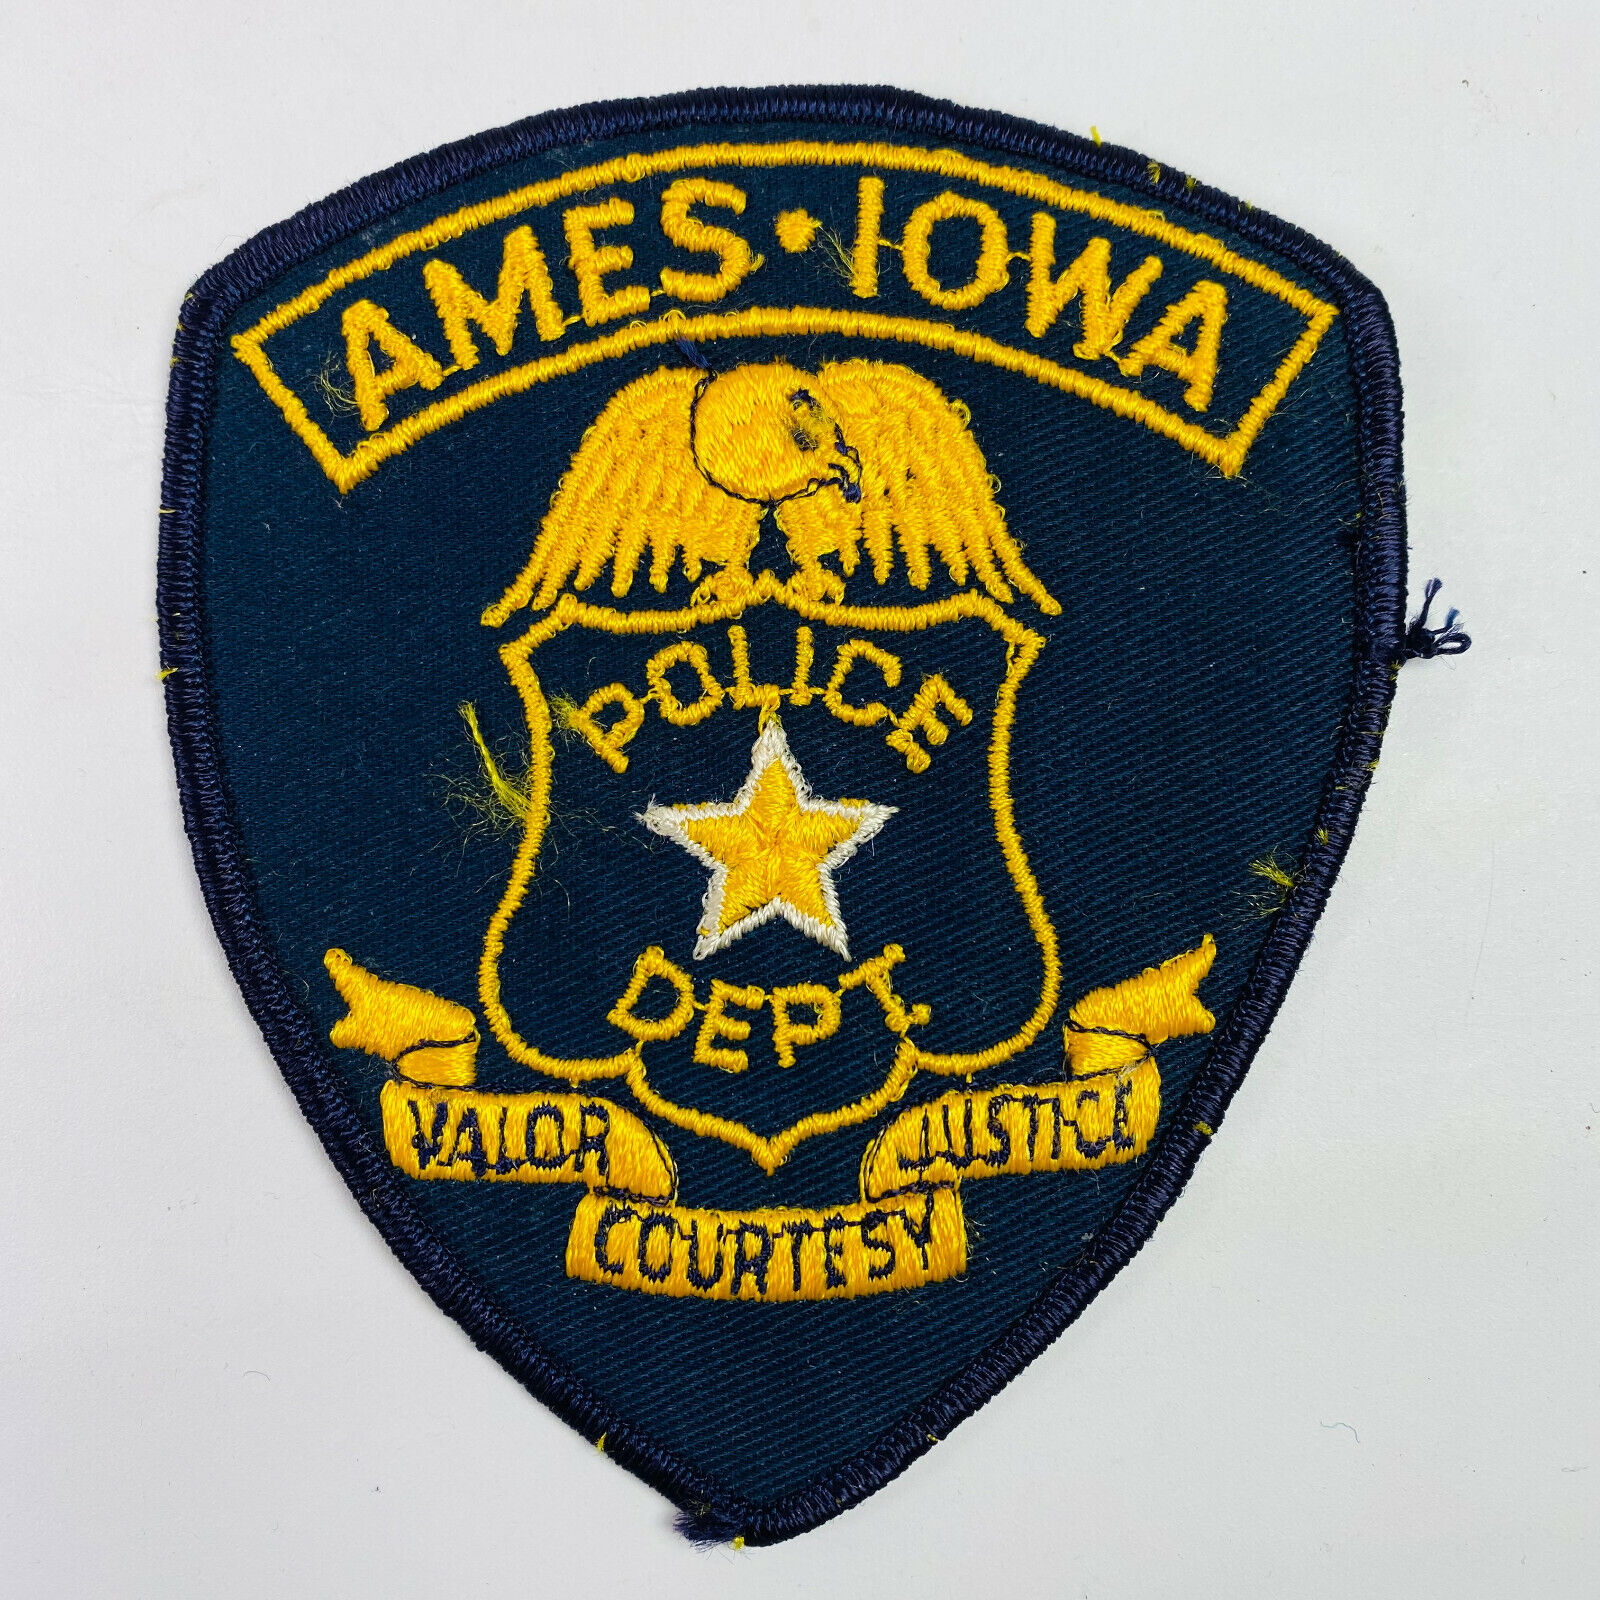 Ames Story County Iowa IA Patch A2B